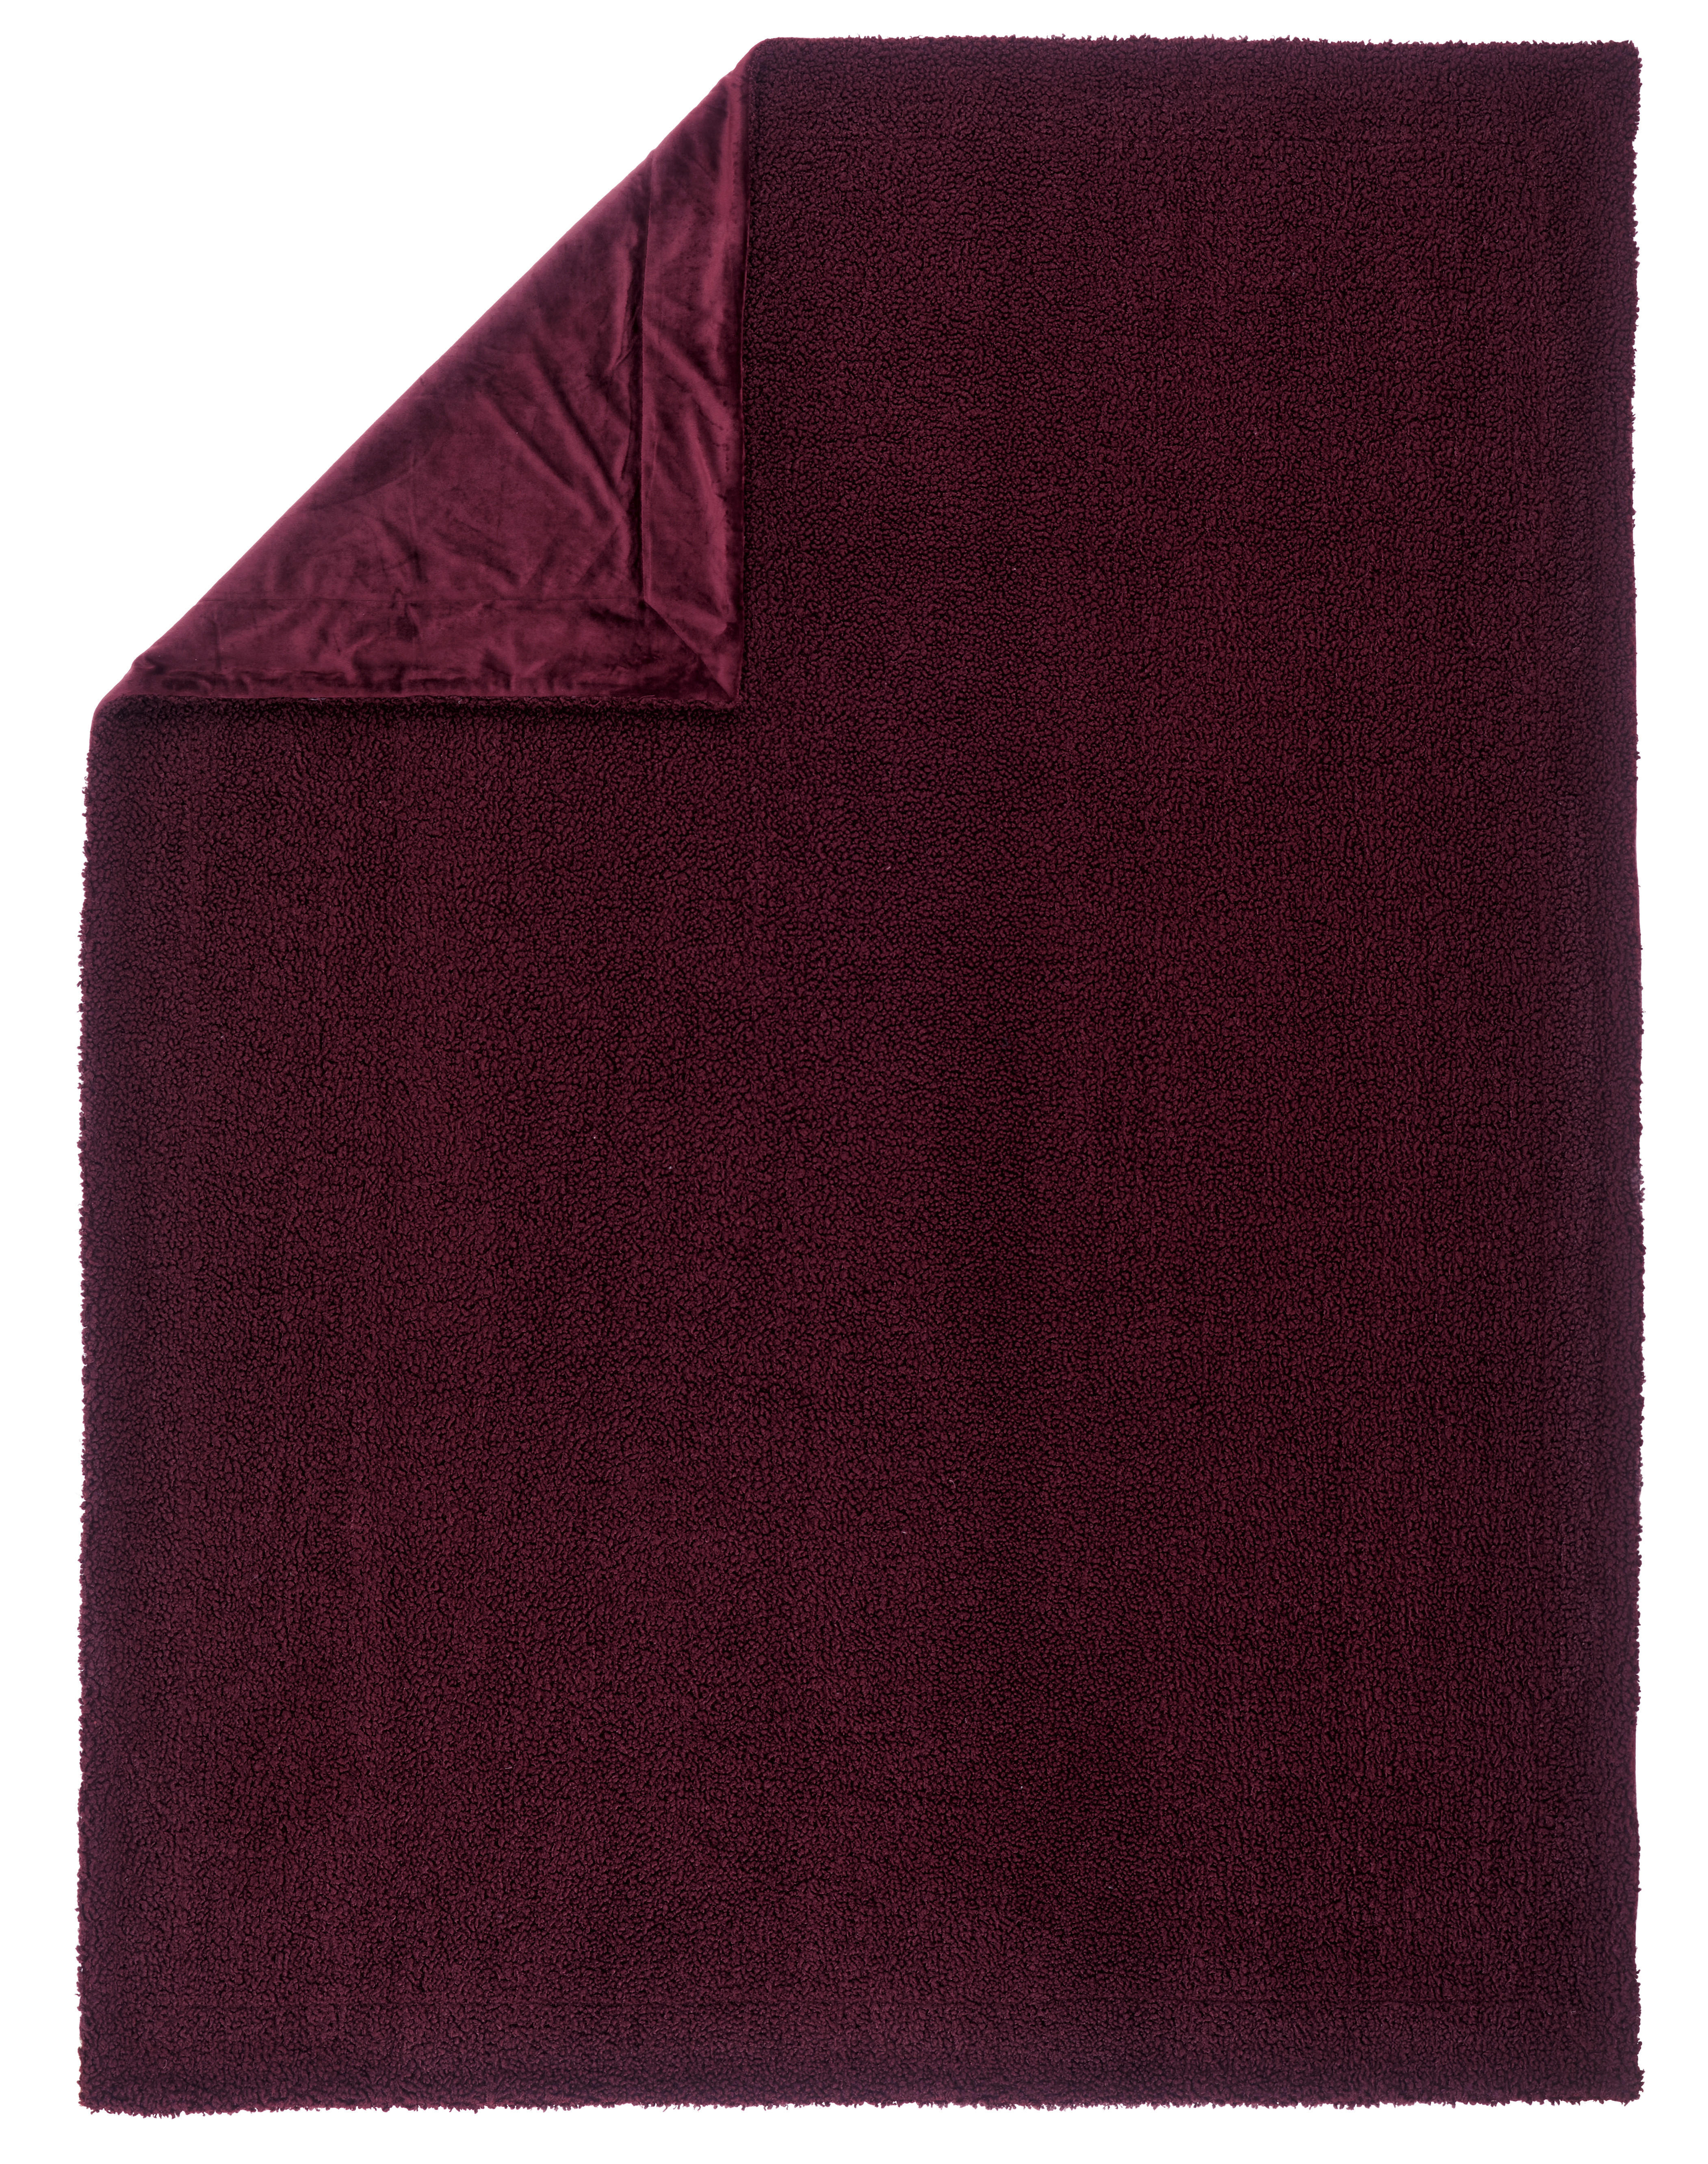 WOHNDECKE Curly 150/200 cm  - Bordeaux/Violett, Design, Textil (150/200cm) - Novel